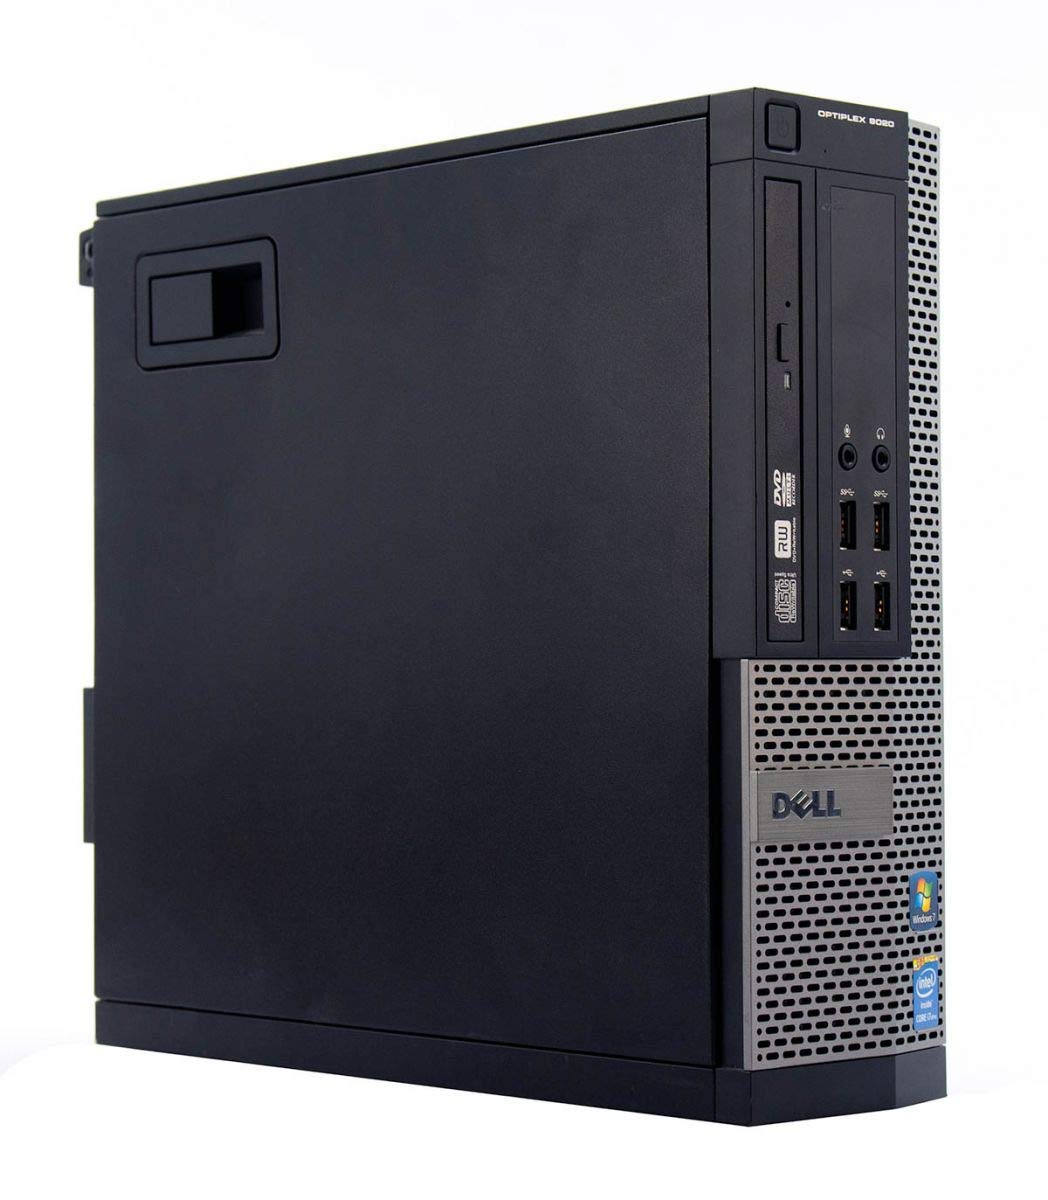 Dell OptiPlex 9020 SFF Computer Desktop PC, Intel i5 Processor, 32GB Ram, 256GB M.2 SSD + 2 TB HDD, FHD 24 Monitor, Wireless Keyboard and Mouse, WiFi & Bluetooth, Windows 10 Pro (Renewed)